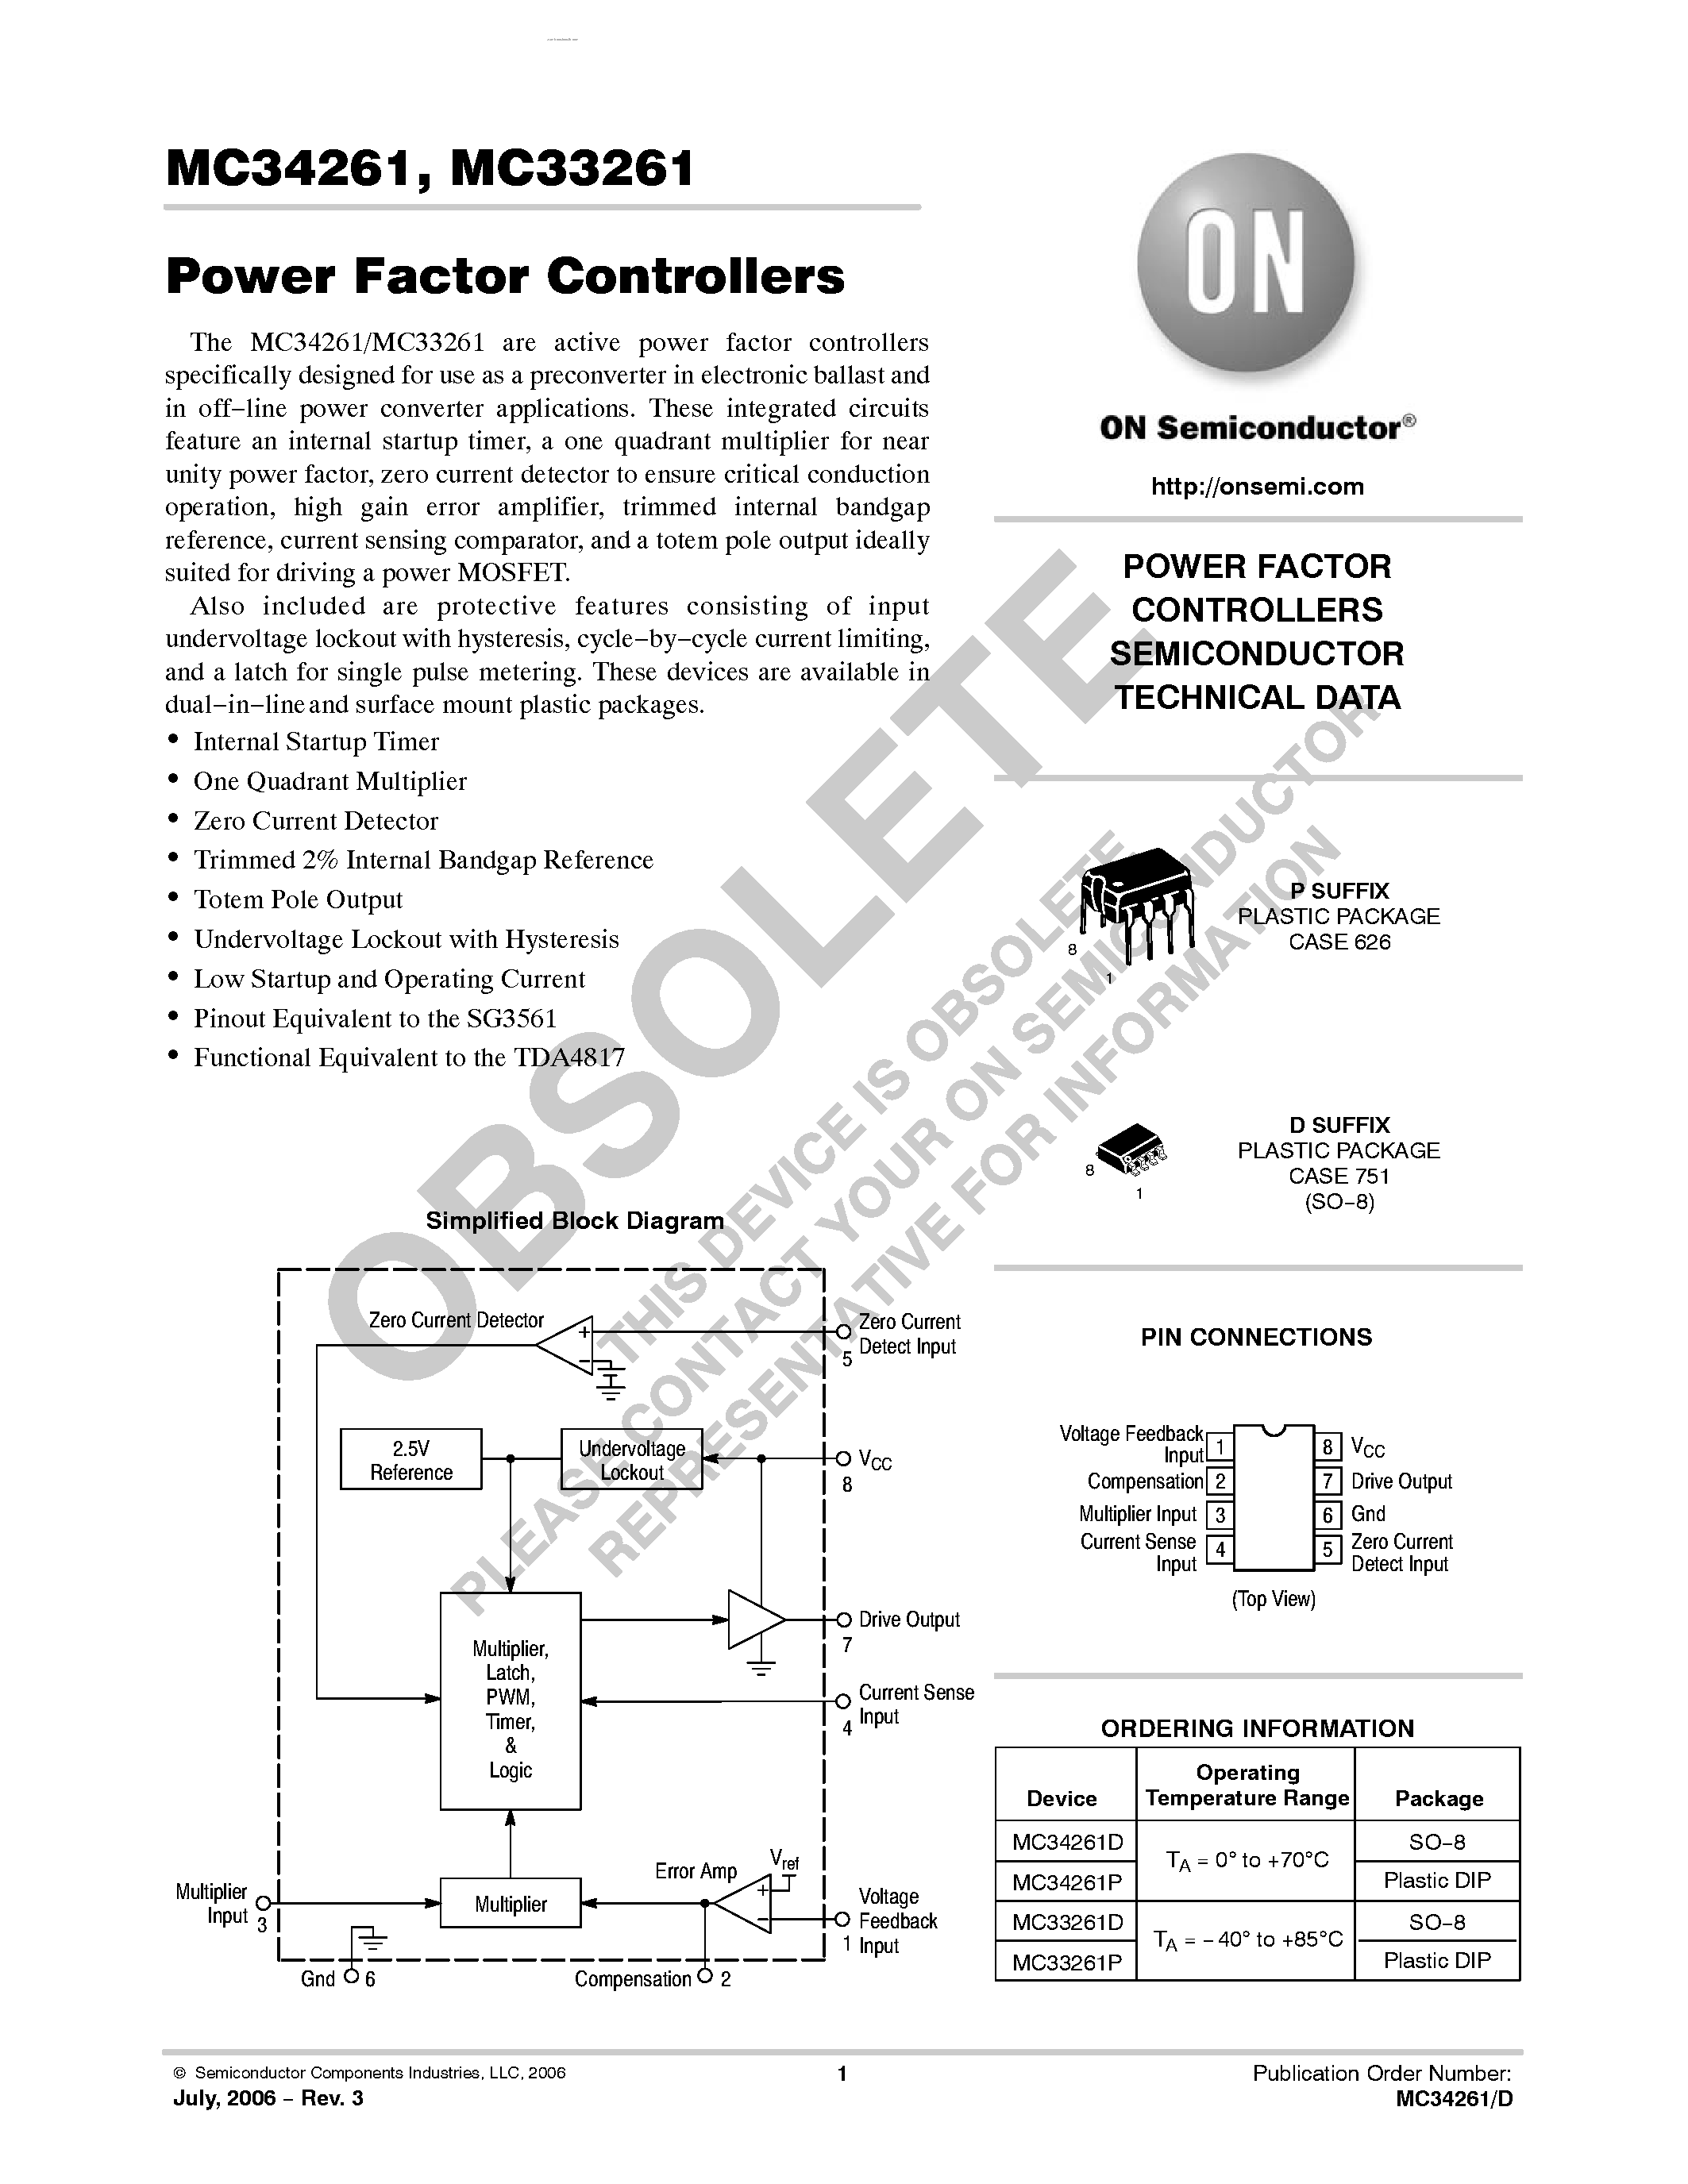 Даташит MC33261 - (MC33261 / MC34261) Power Factor Controllers страница 1